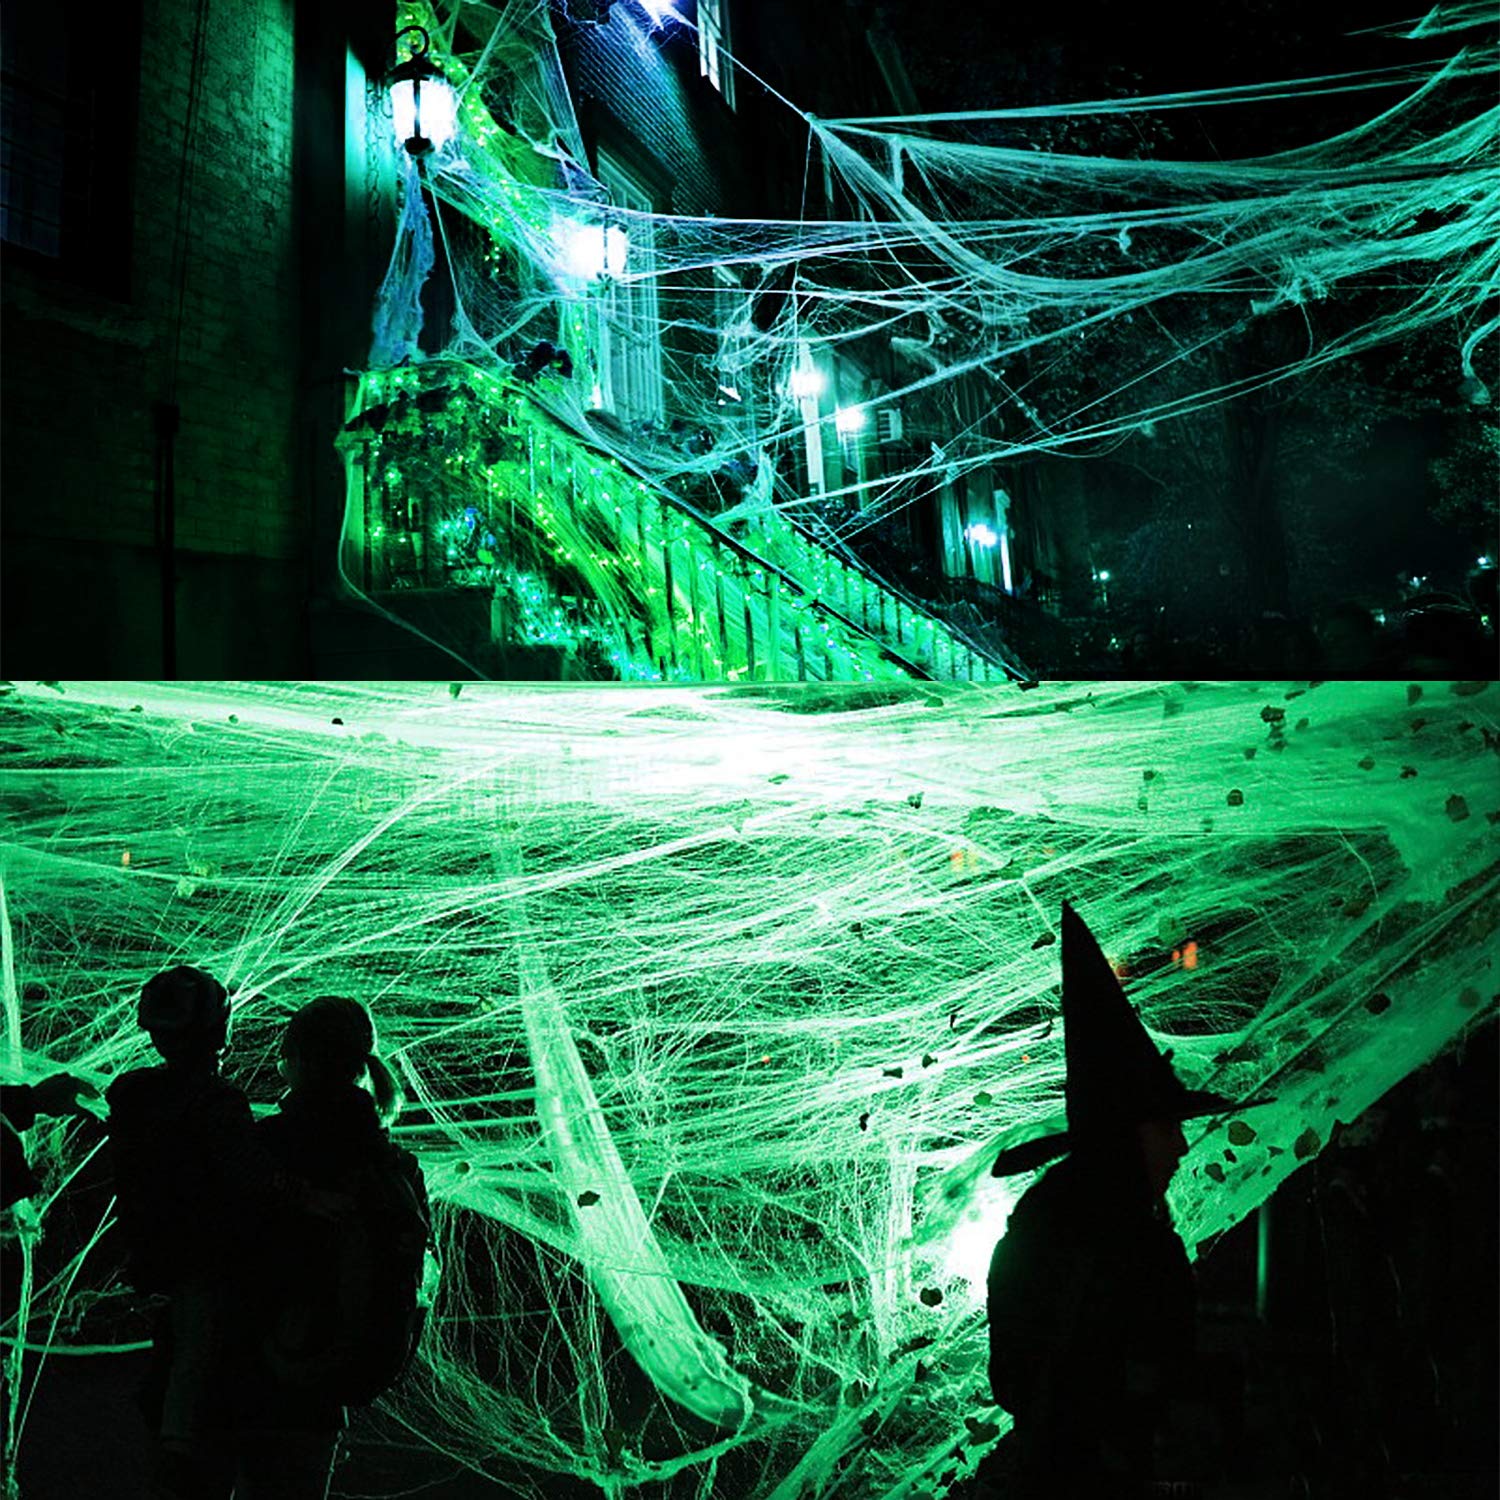 1000 sqft Halloween Spider Web Decorations, VIRIITA Super Stretch Fake Spider Webs, White Webbing Spooky Cobwebs Halloween Supplies for Halloween Party Decorations Bar Haunted House